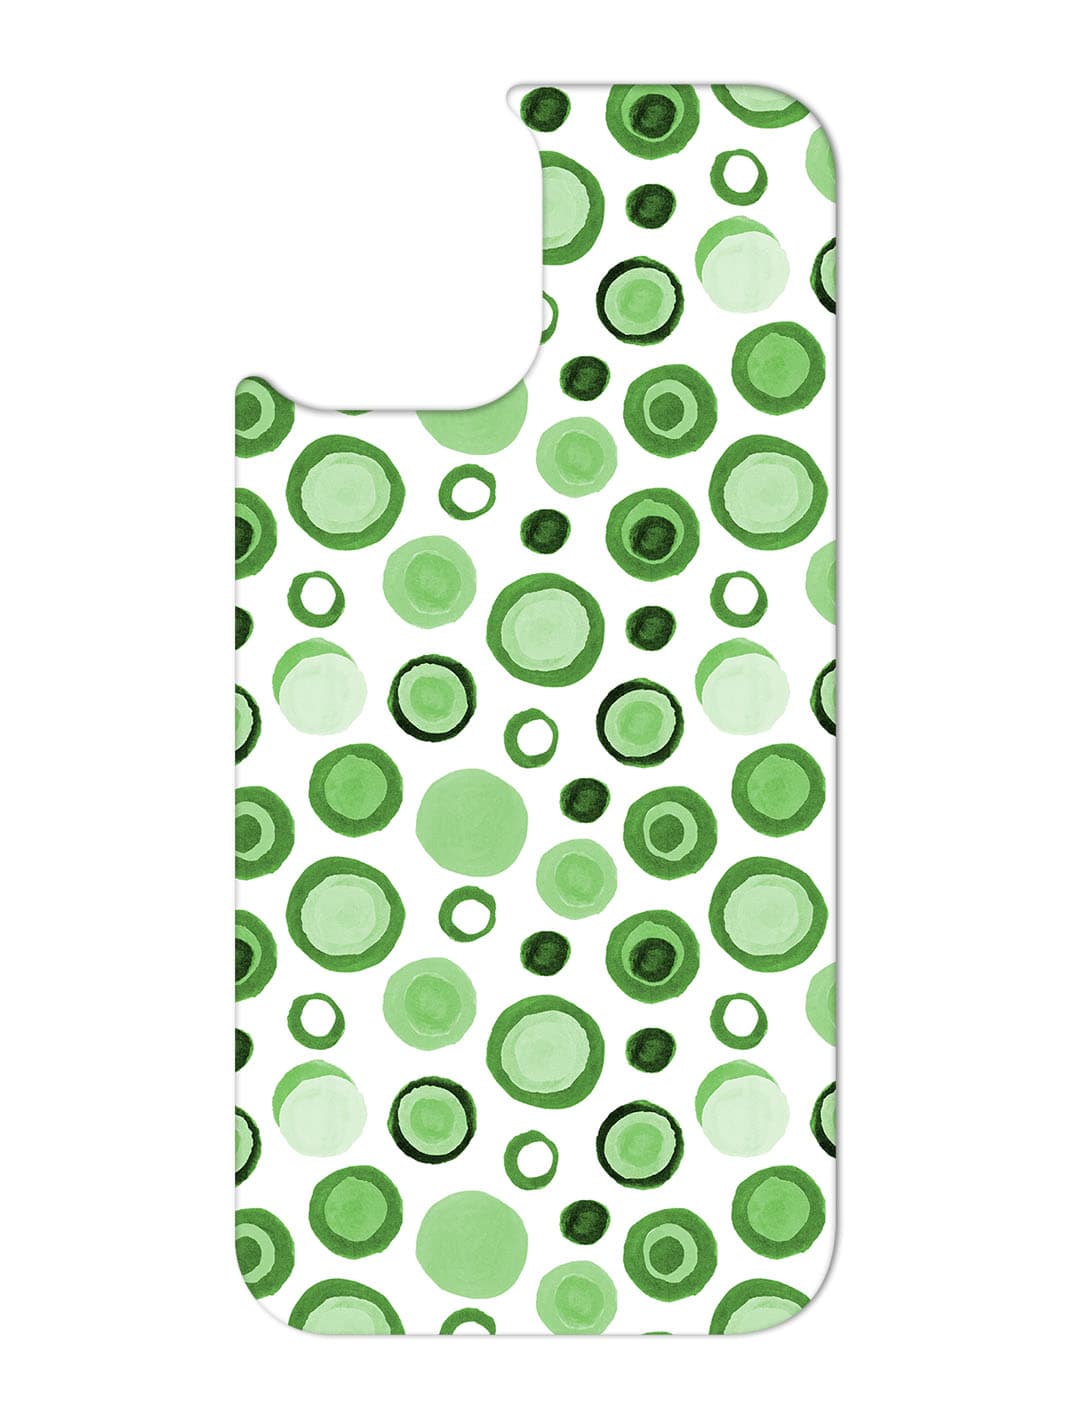 Swap - Green bubbles